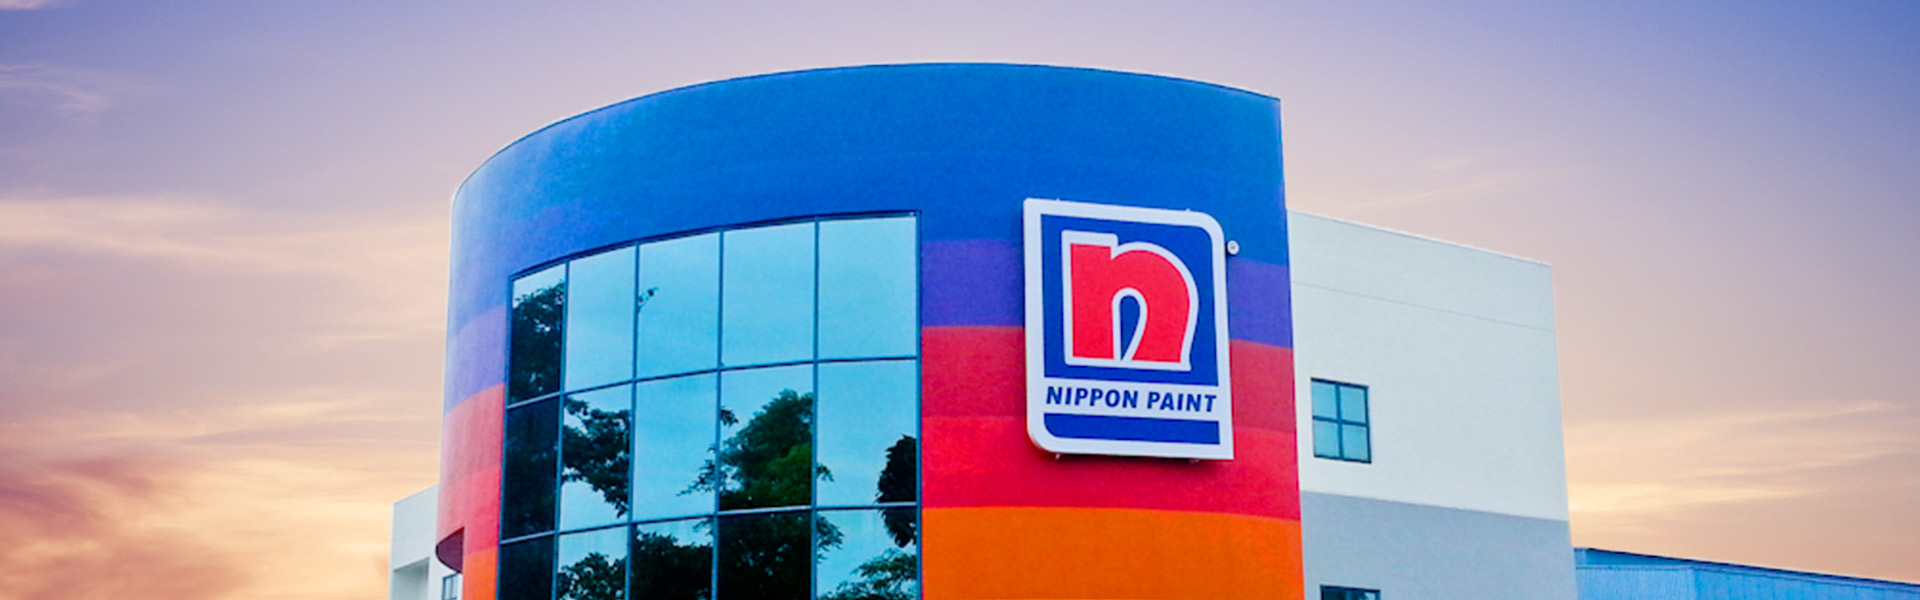 Nippon Paint (M) Sdn Bhd